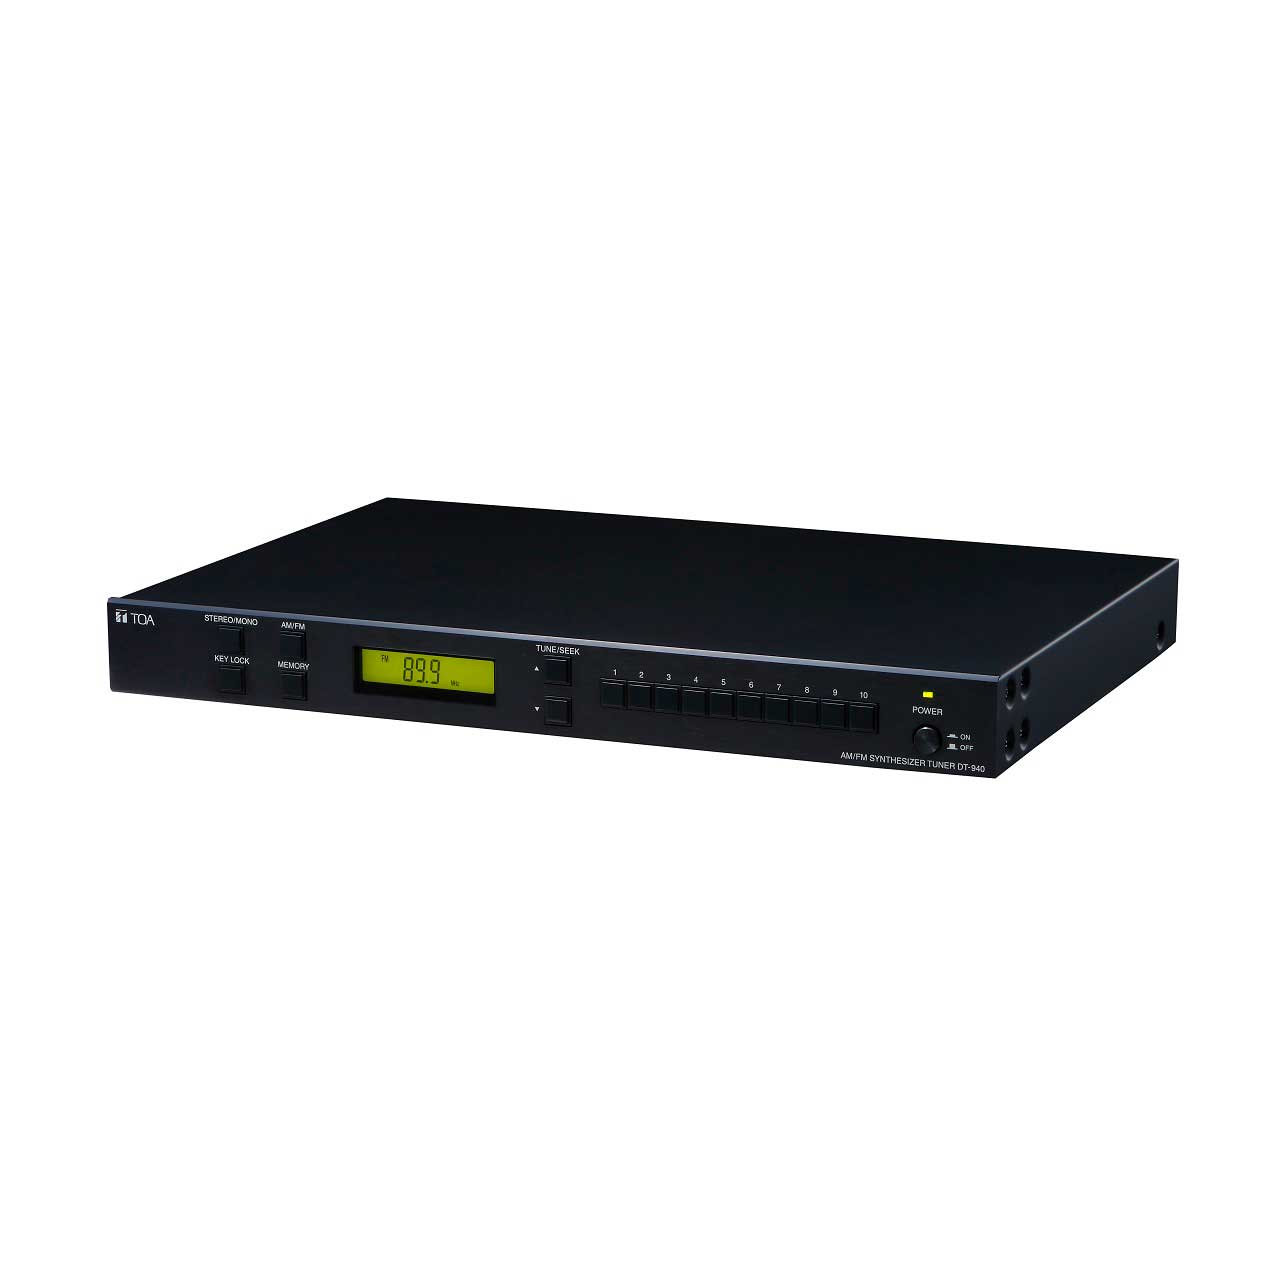 TOA DT-940 1U AM/FM Tuner with 40 Presets / Digital Display - Black TOA-DT-940